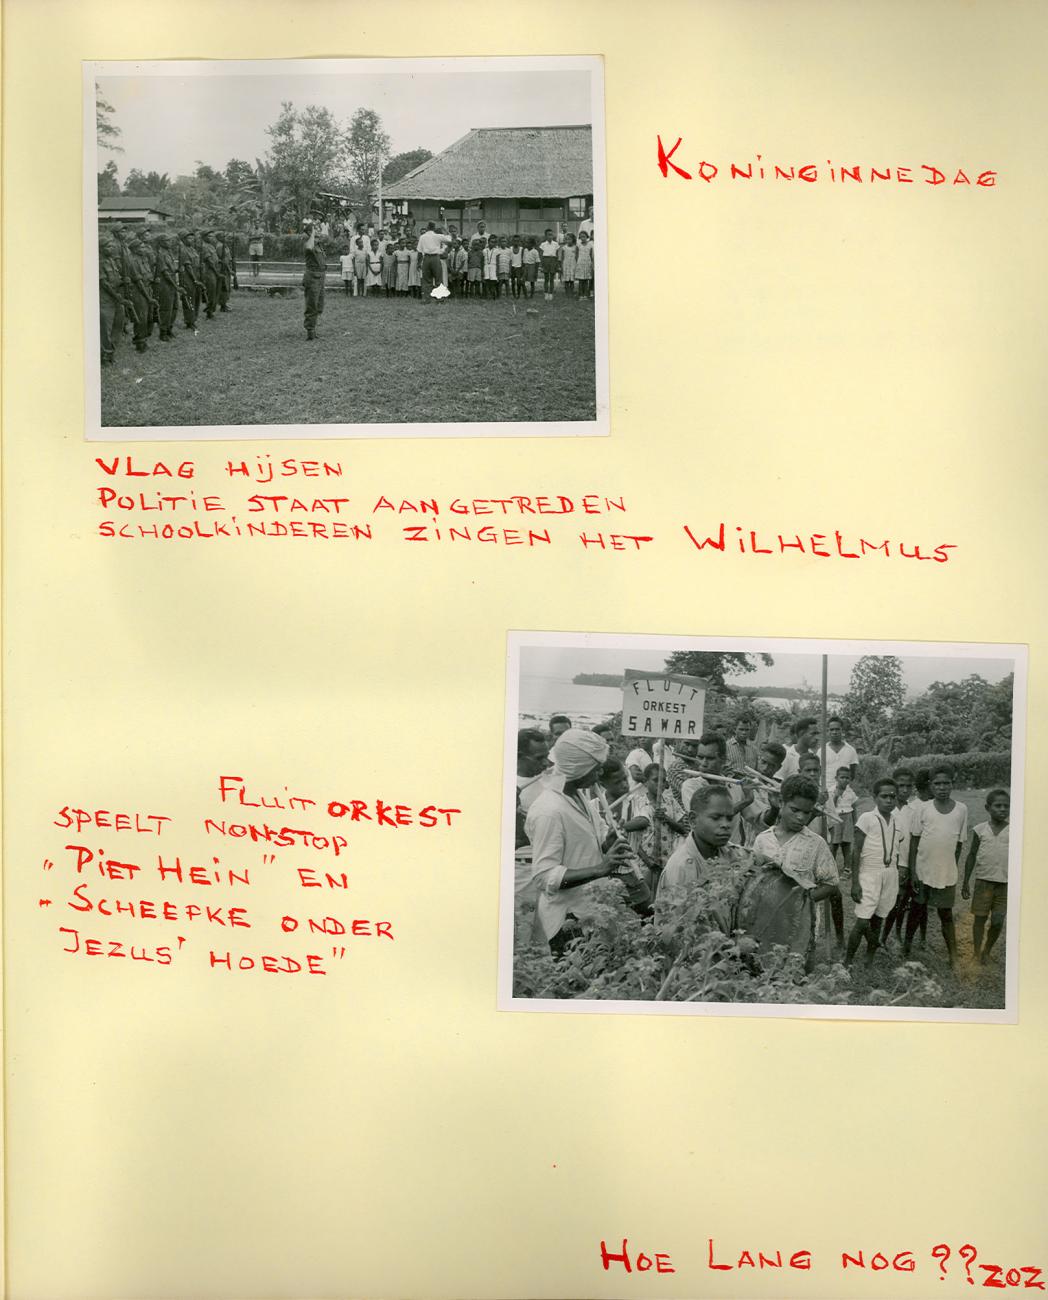 BD/83/25 - 
Koninginnedagviering in Sarmi, met politiesaluut, schoolkoortje en fluitorkest Sawar
